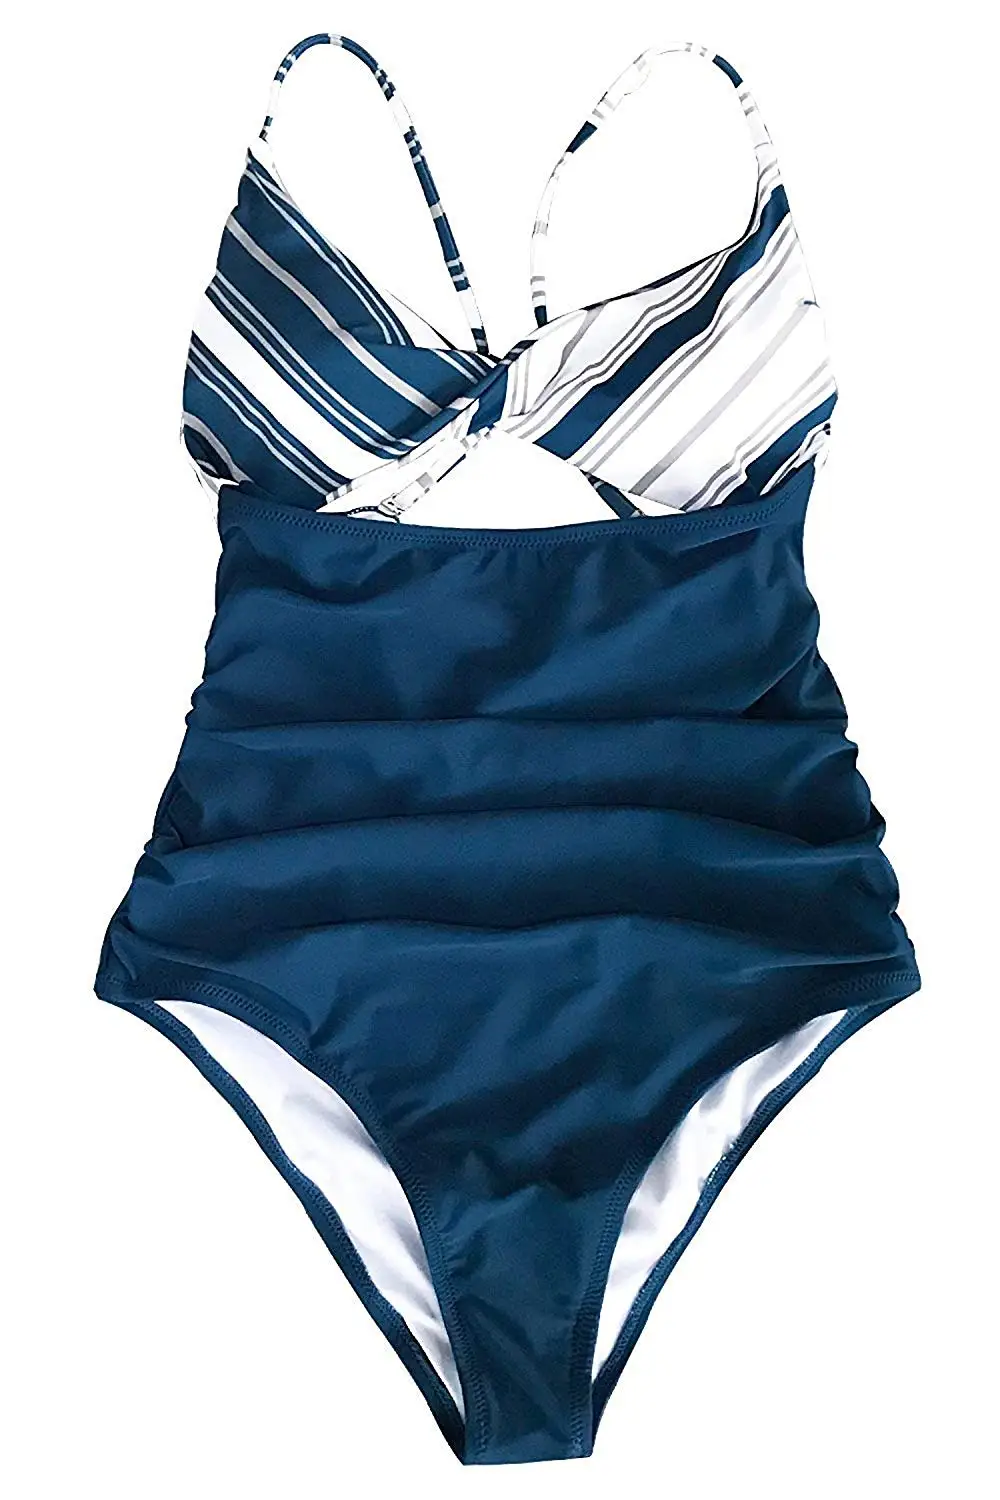 Cheap Sparkle Swimsuit, find Sparkle Swimsuit deals on line at Alibaba.com